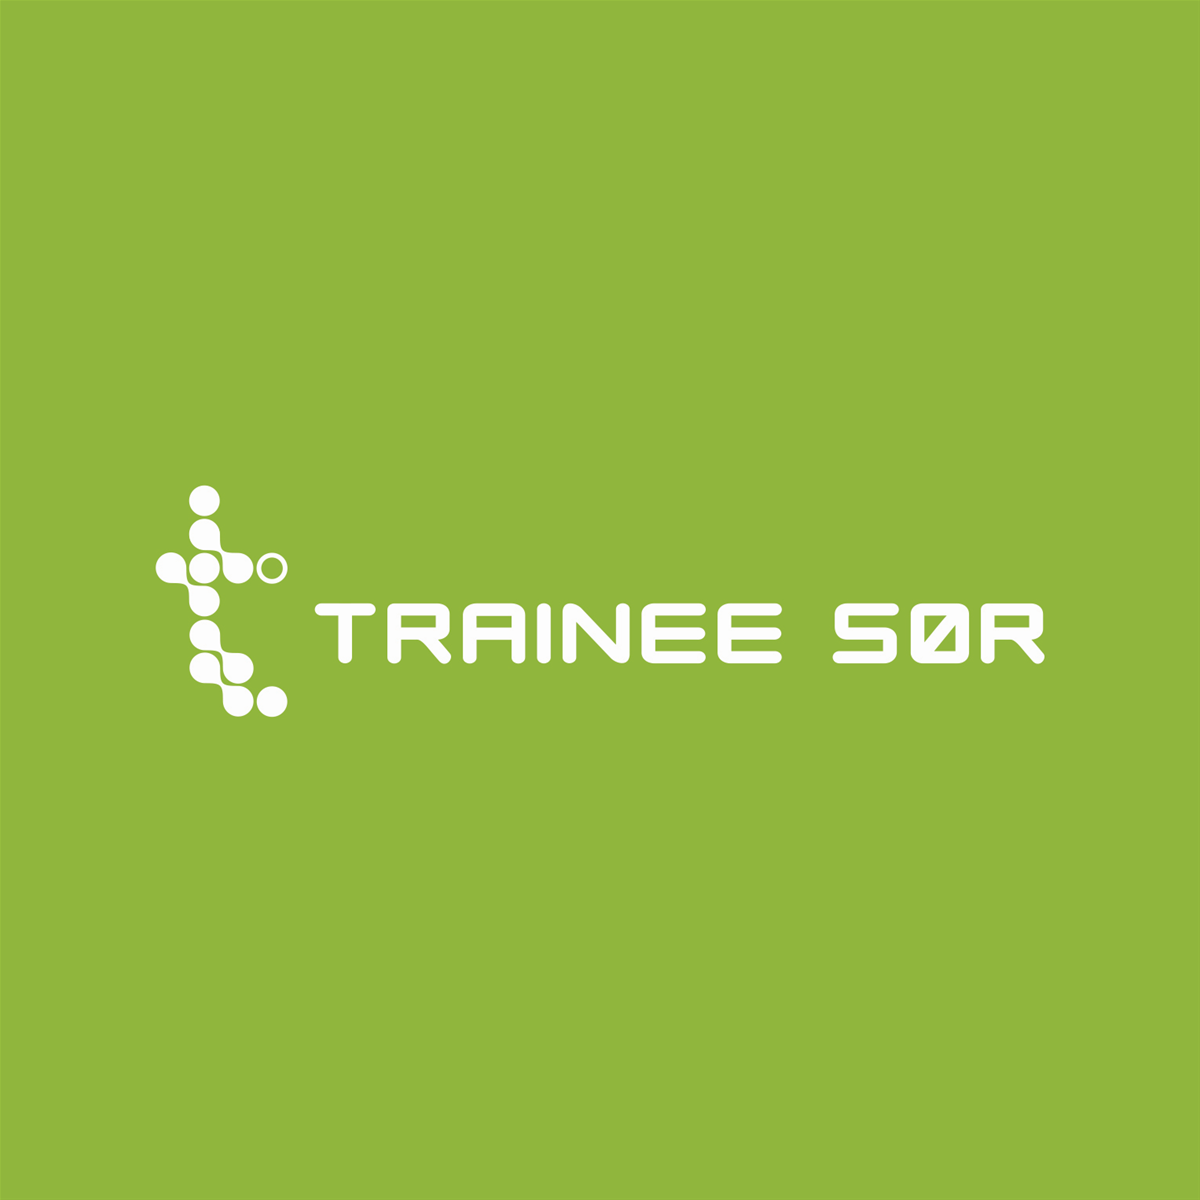 kvadrat-logo-trainee-sor